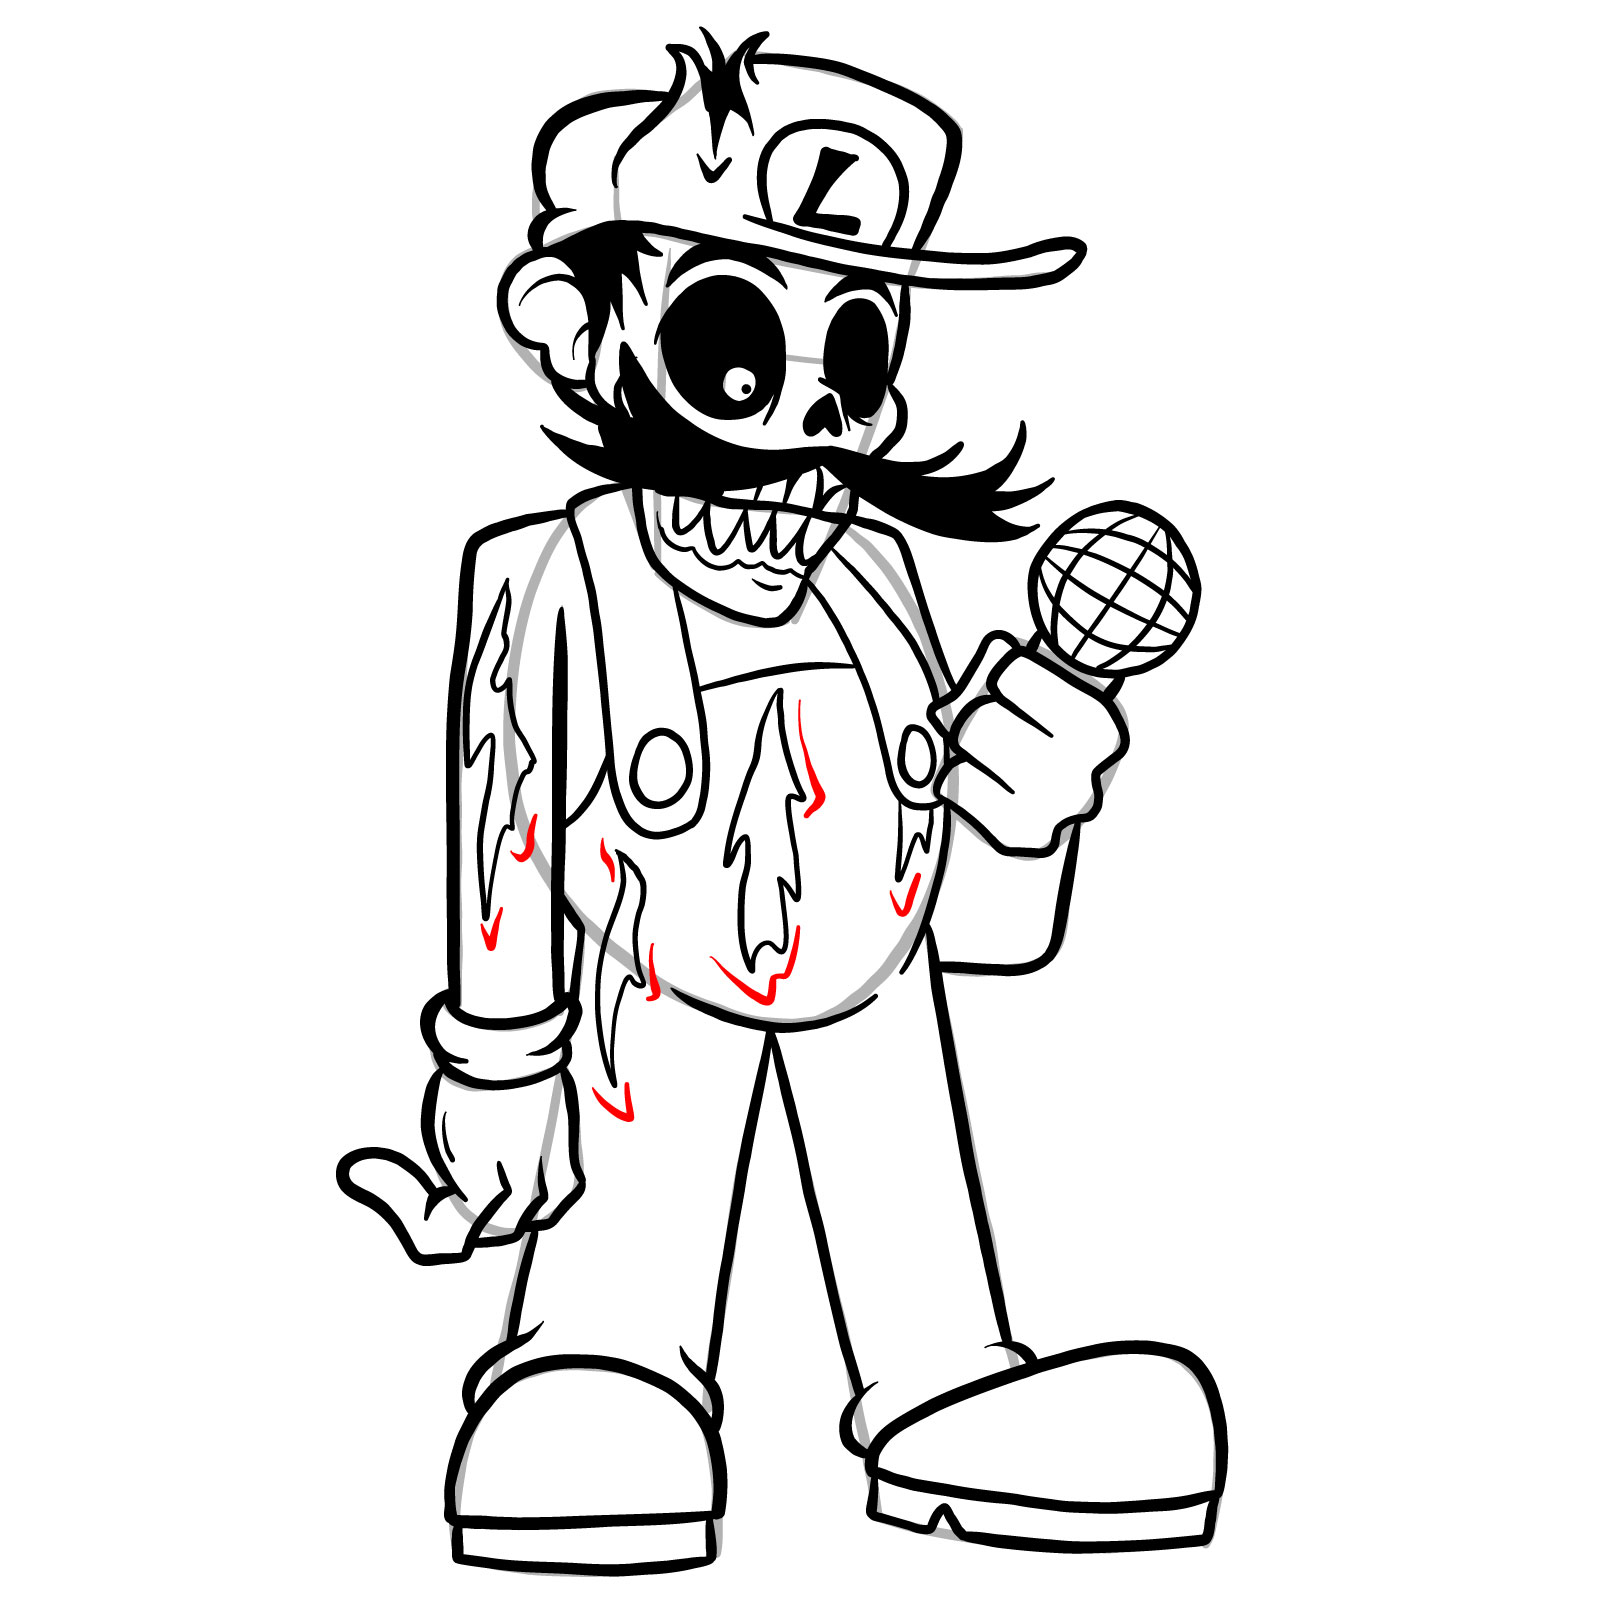 How to draw I HATE YOU Luigi - step 35